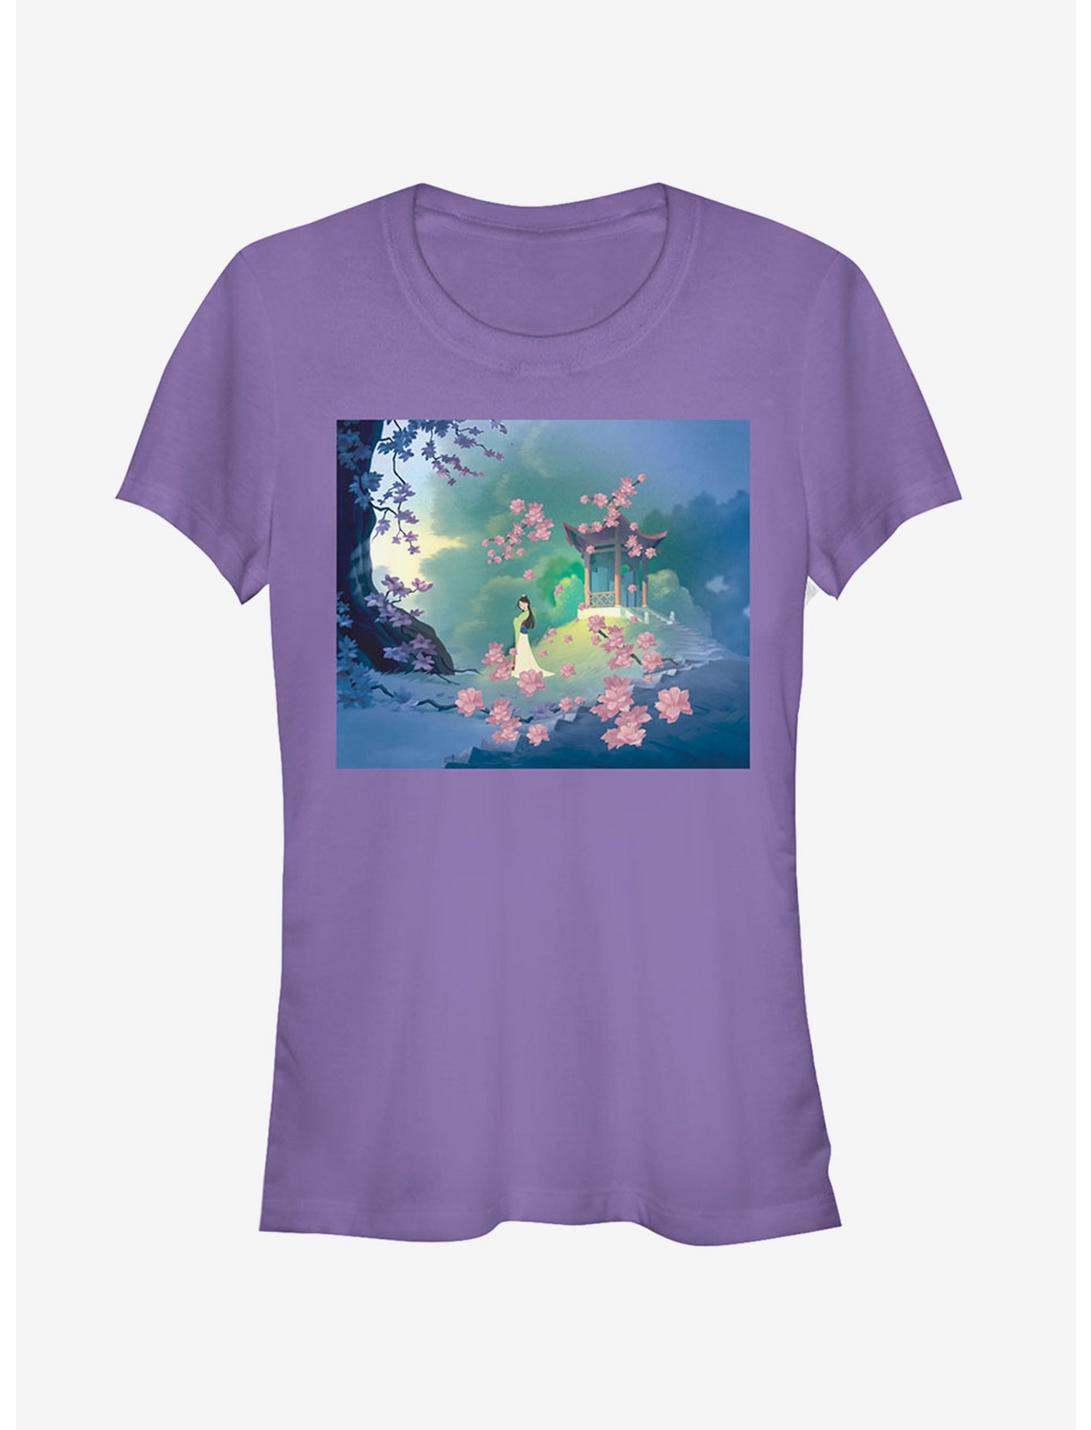 Disney Blossom Scene Girls T-Shirt, PURPLE, hi-res